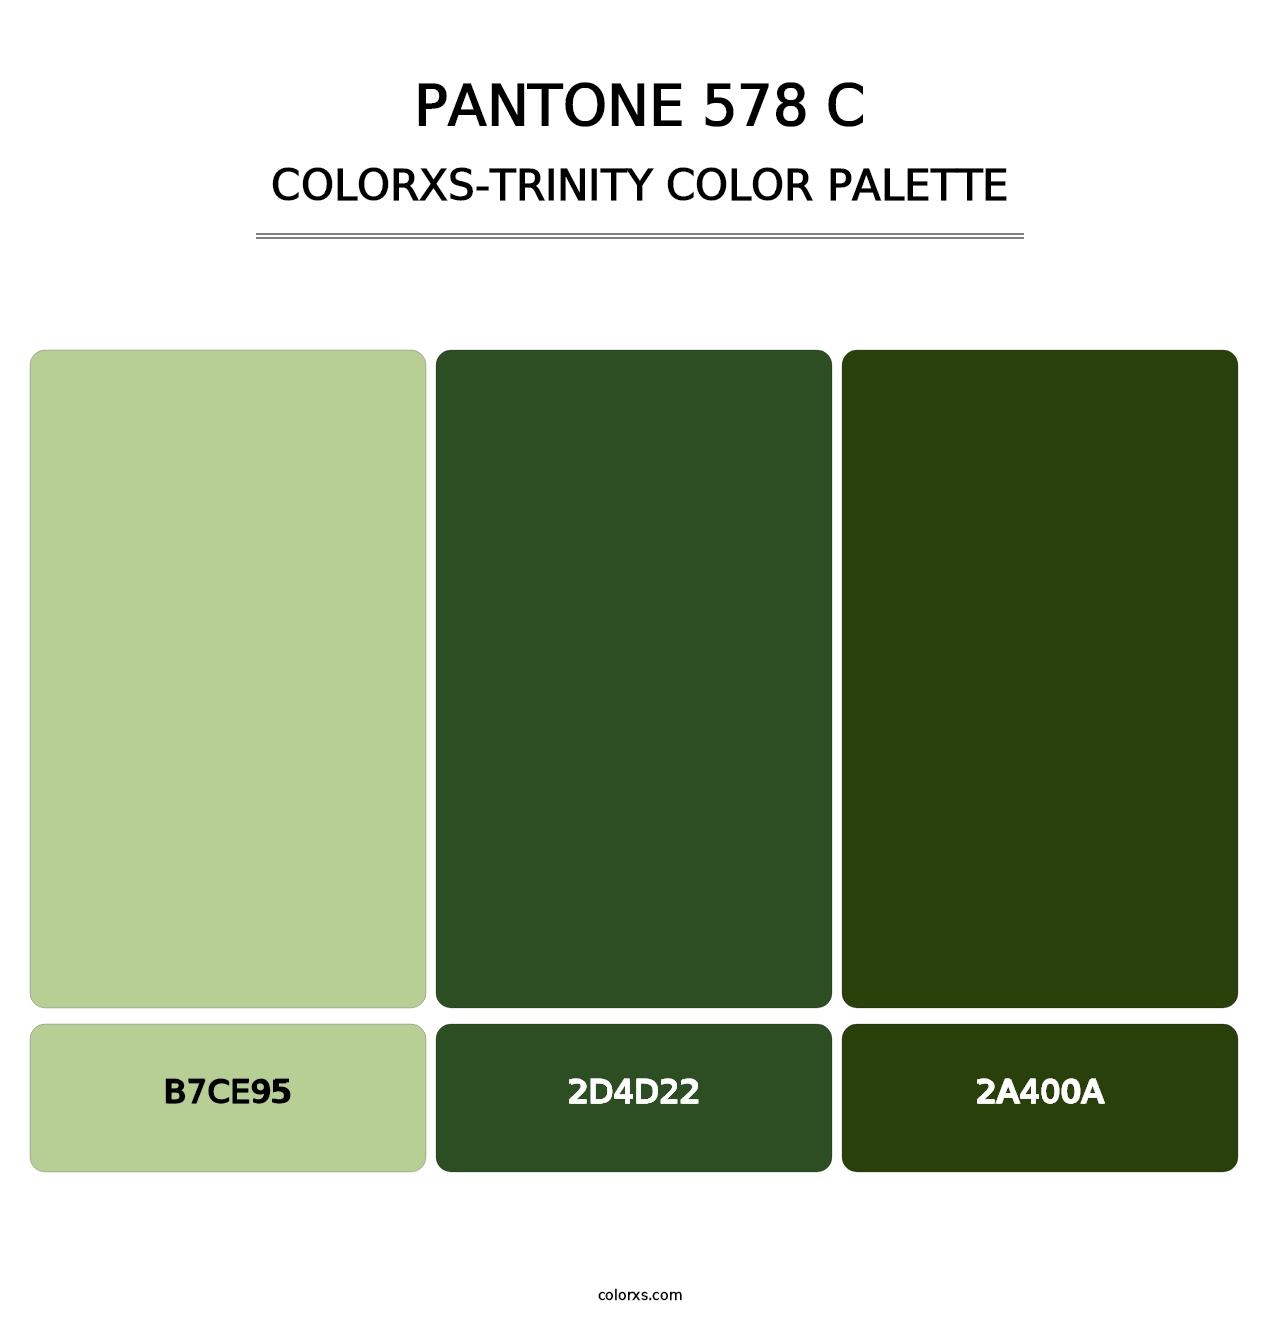 PANTONE 578 C - Colorxs Trinity Palette